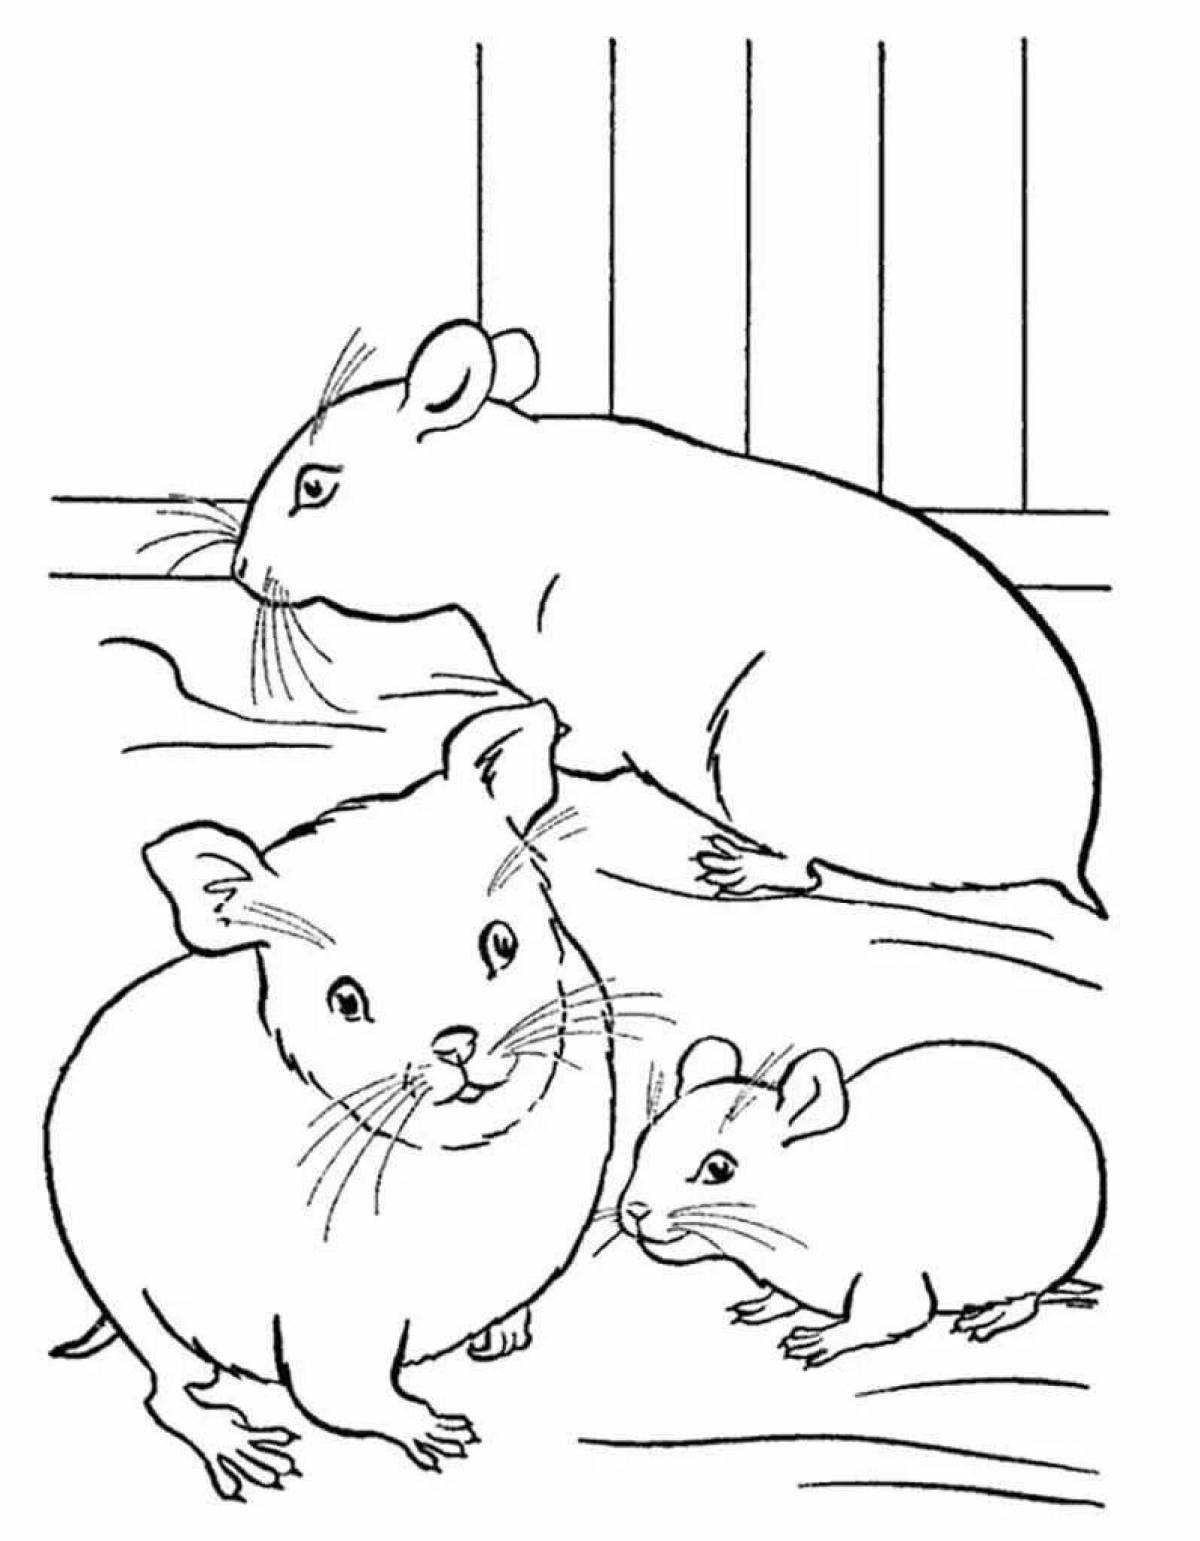 Cute hamster coloring book for kids